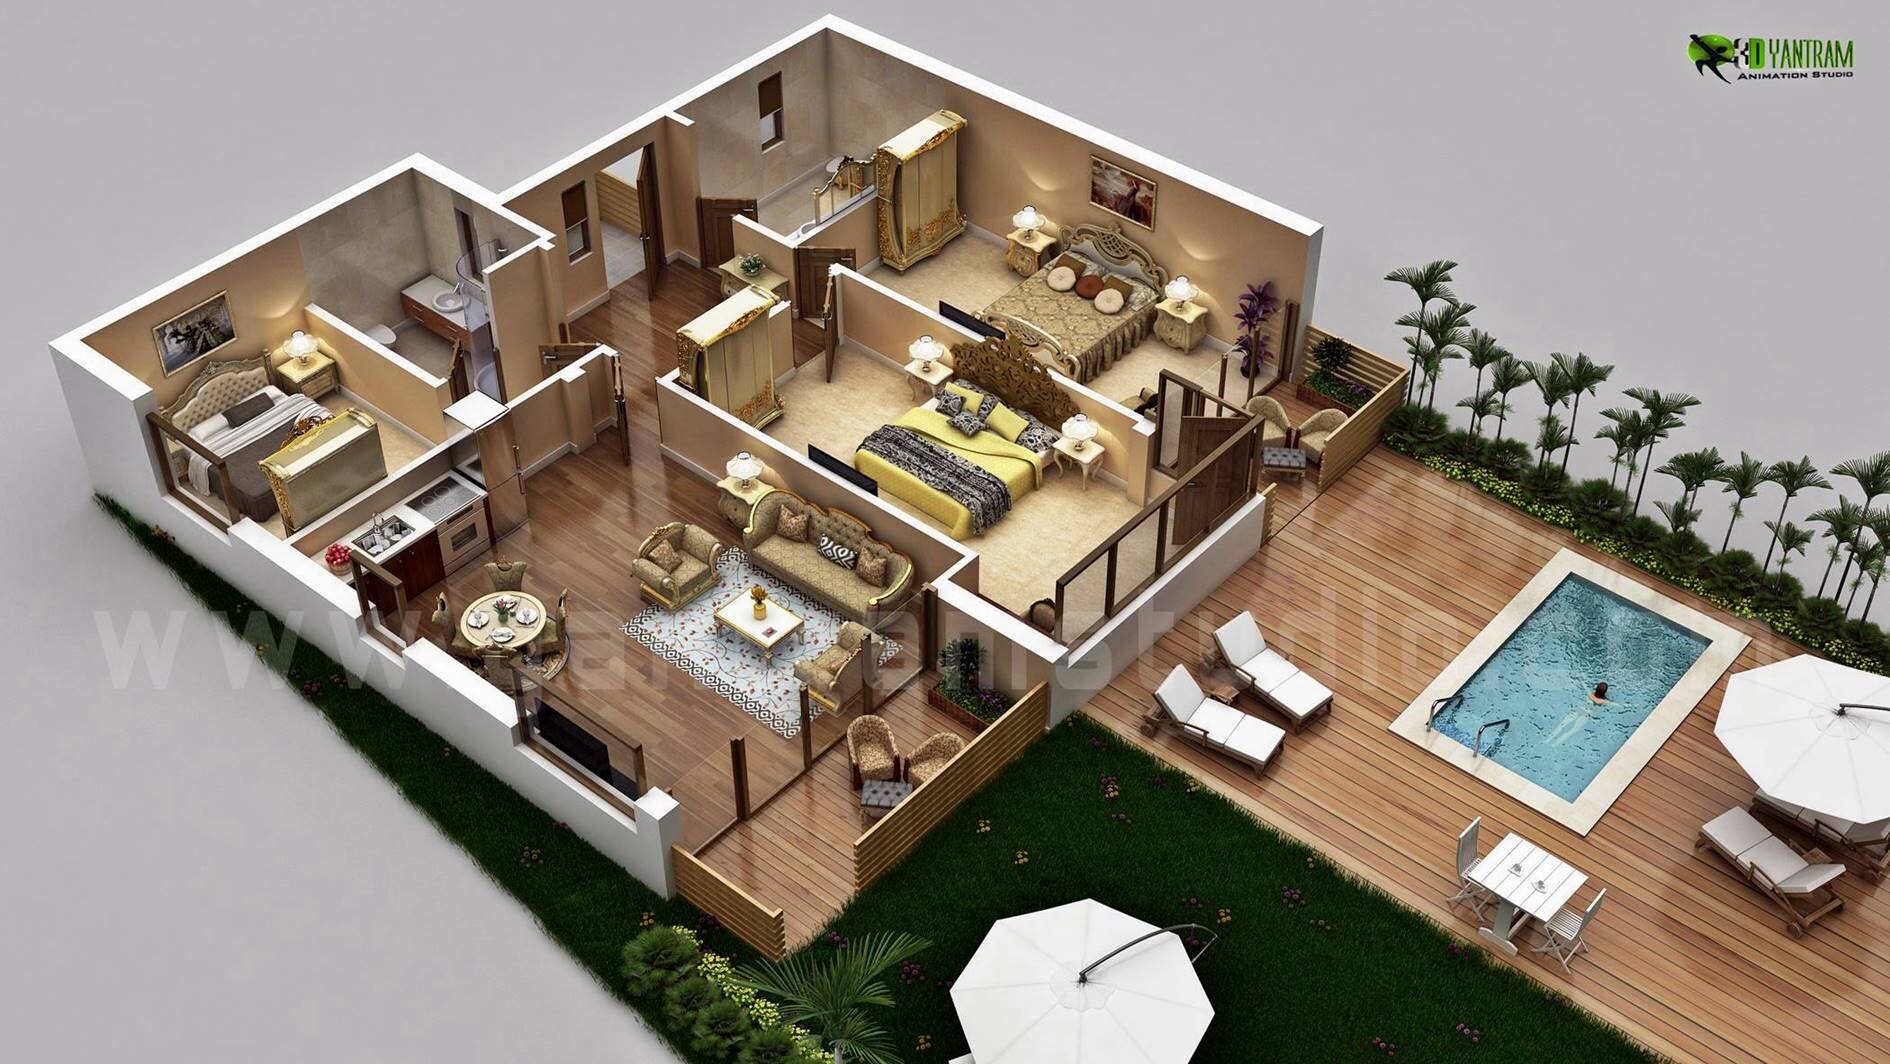 Residential House Floor Plan Design, Virtual House Plans Free